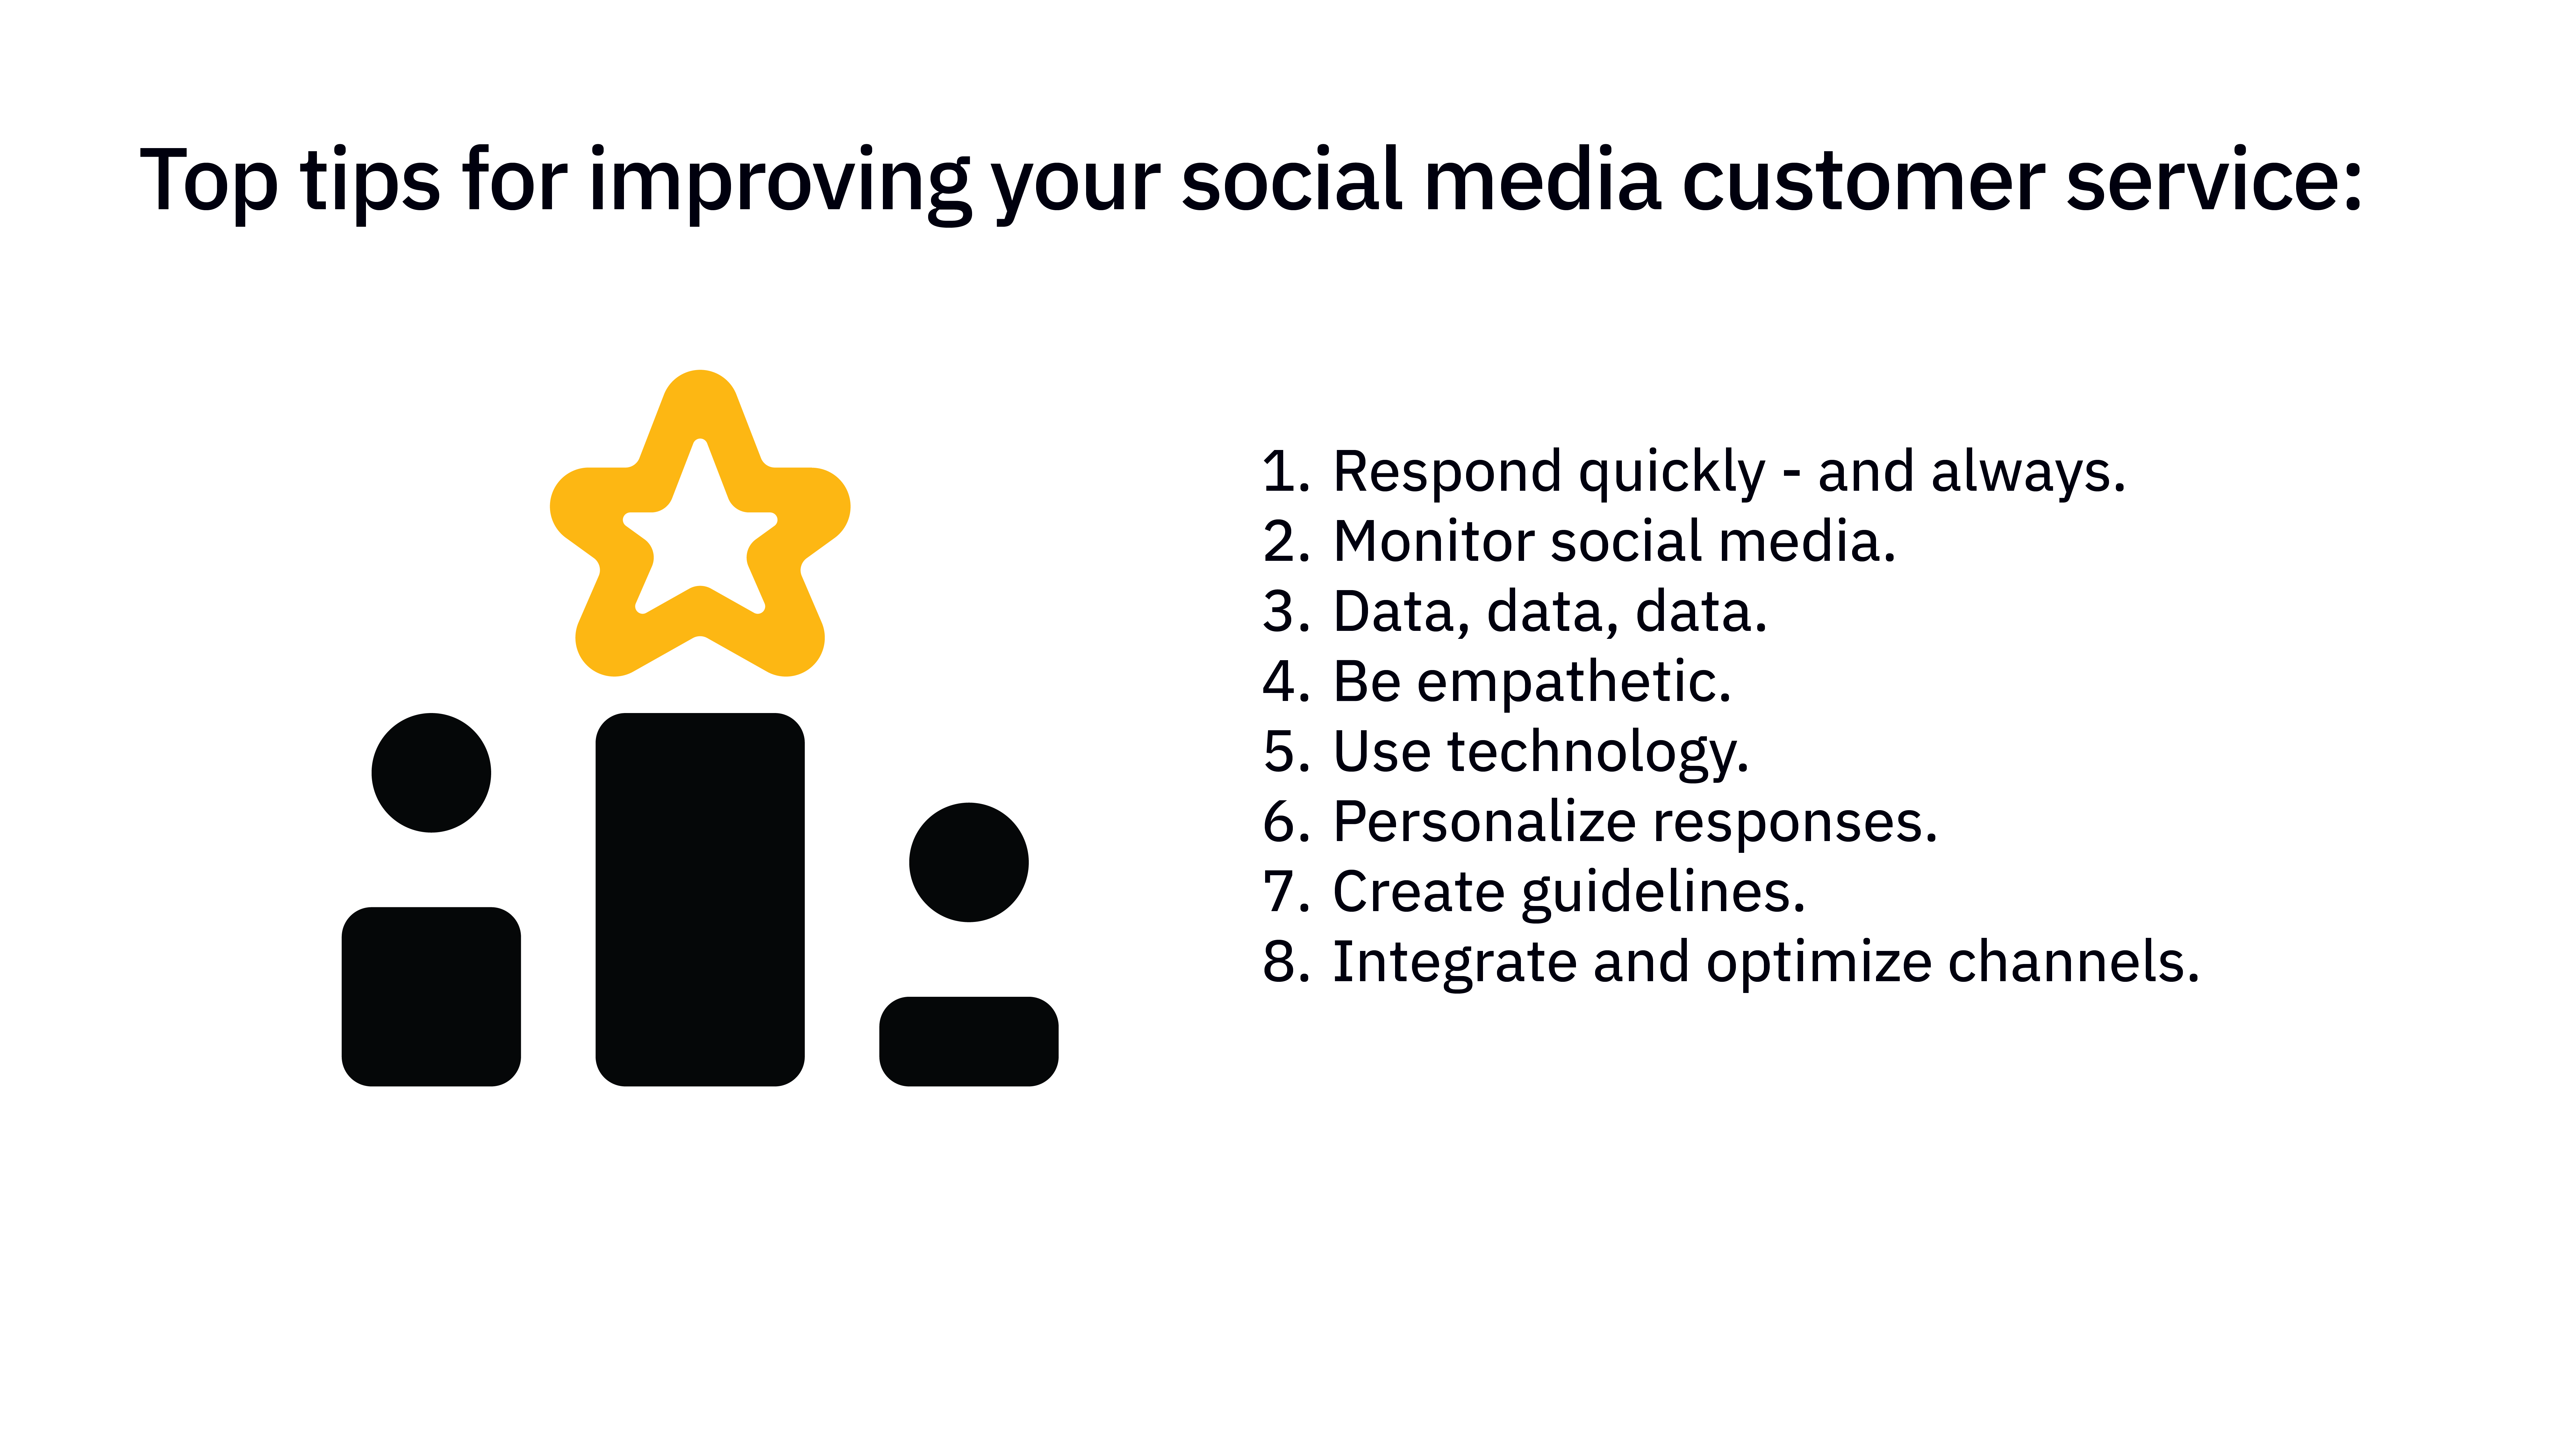 Top tips for improving social media customer service